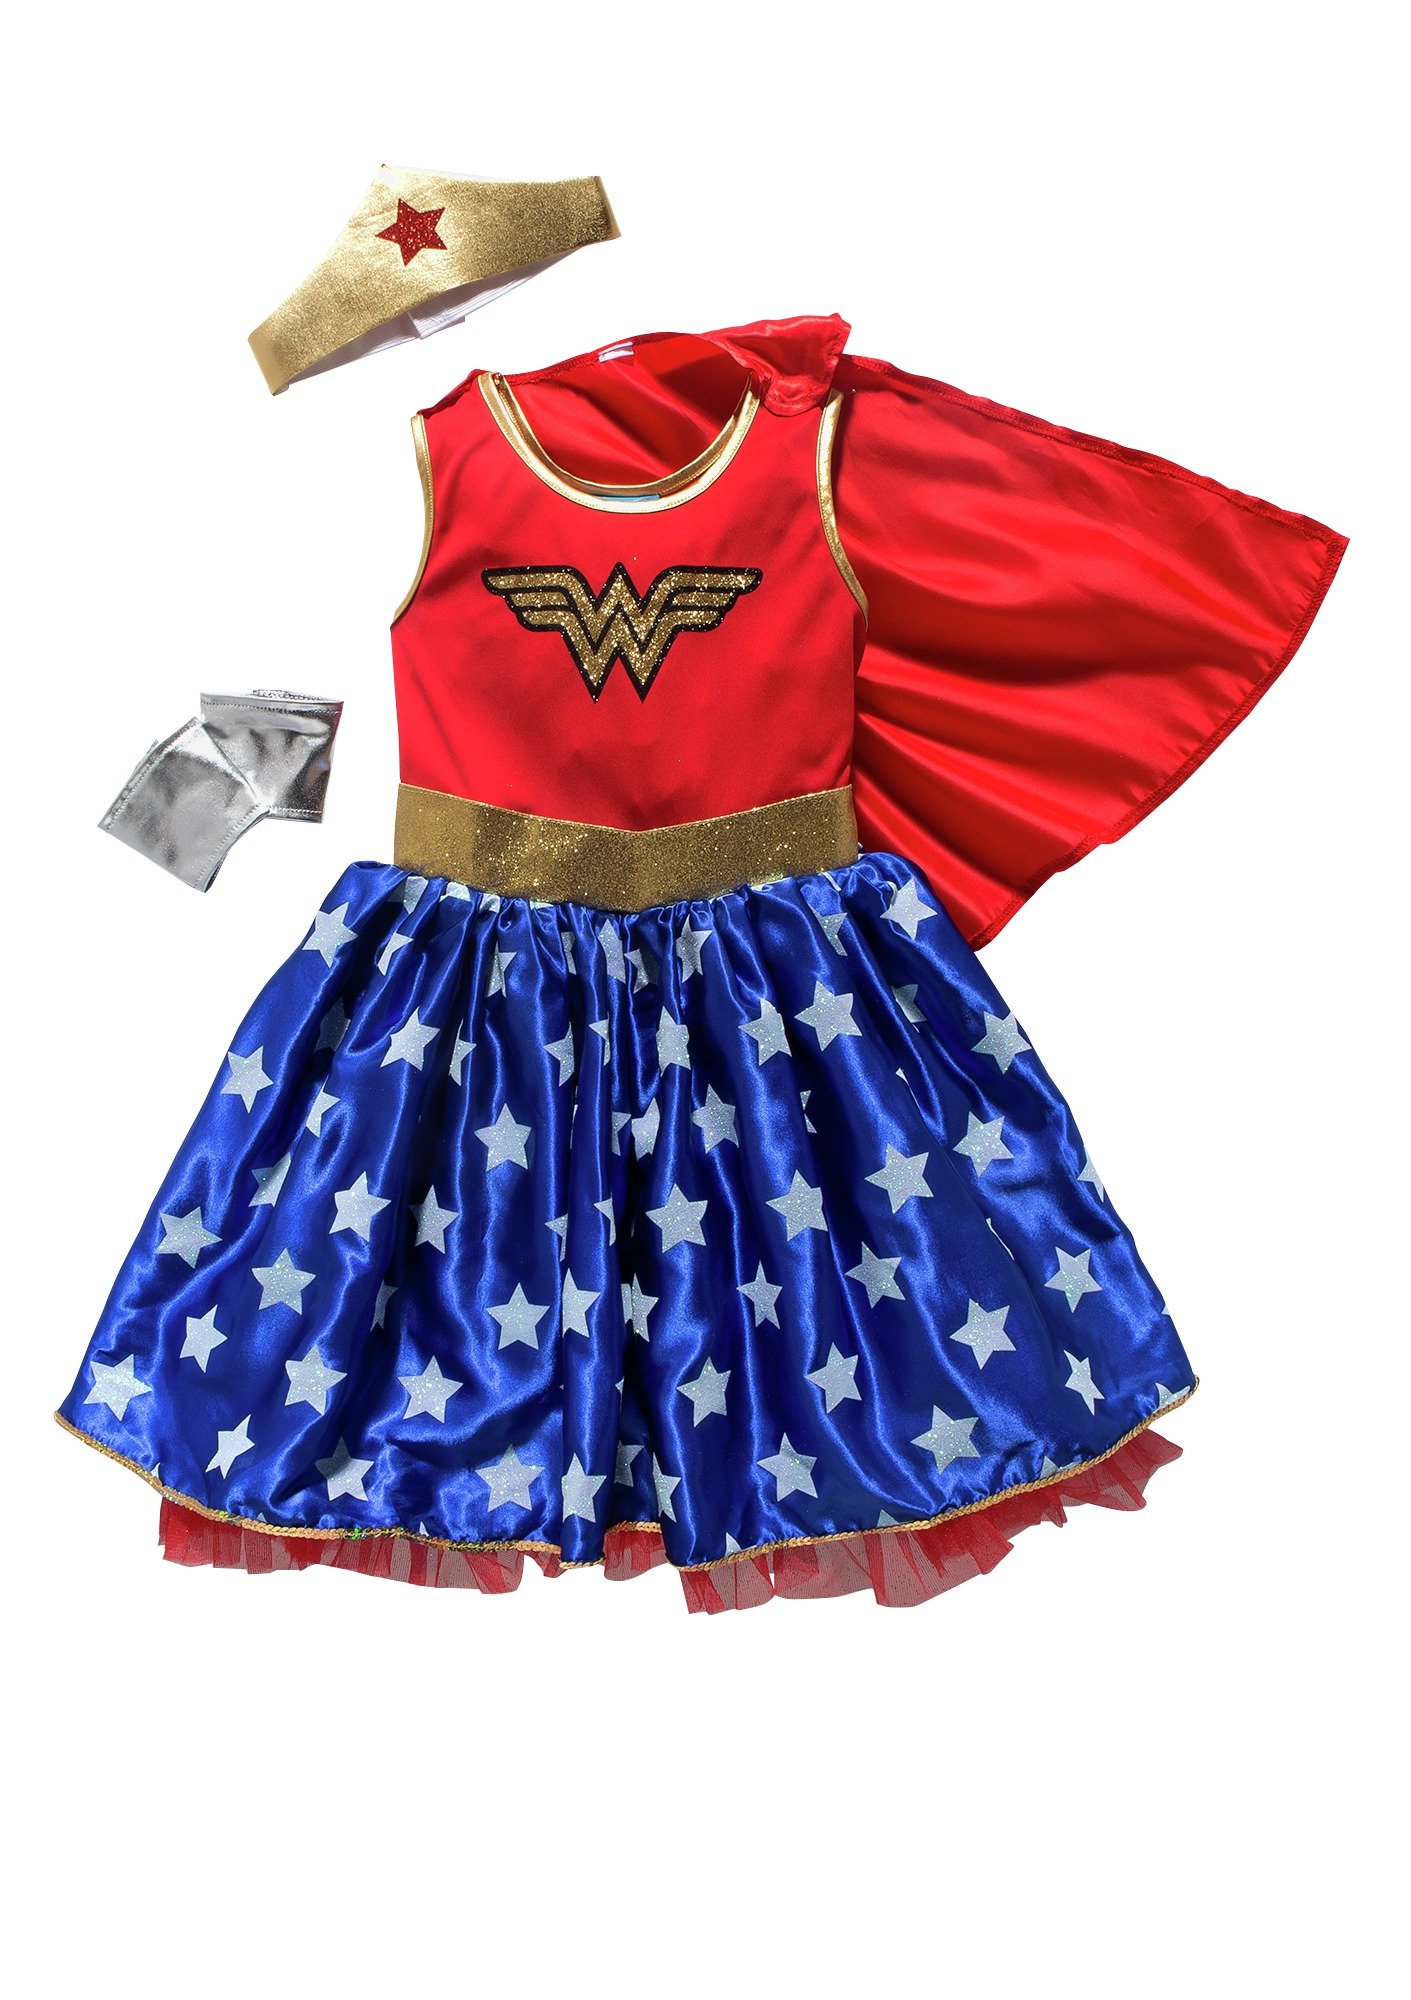 DC Wonder Woman Children's Fancy Dress Costume - 3-4 Years